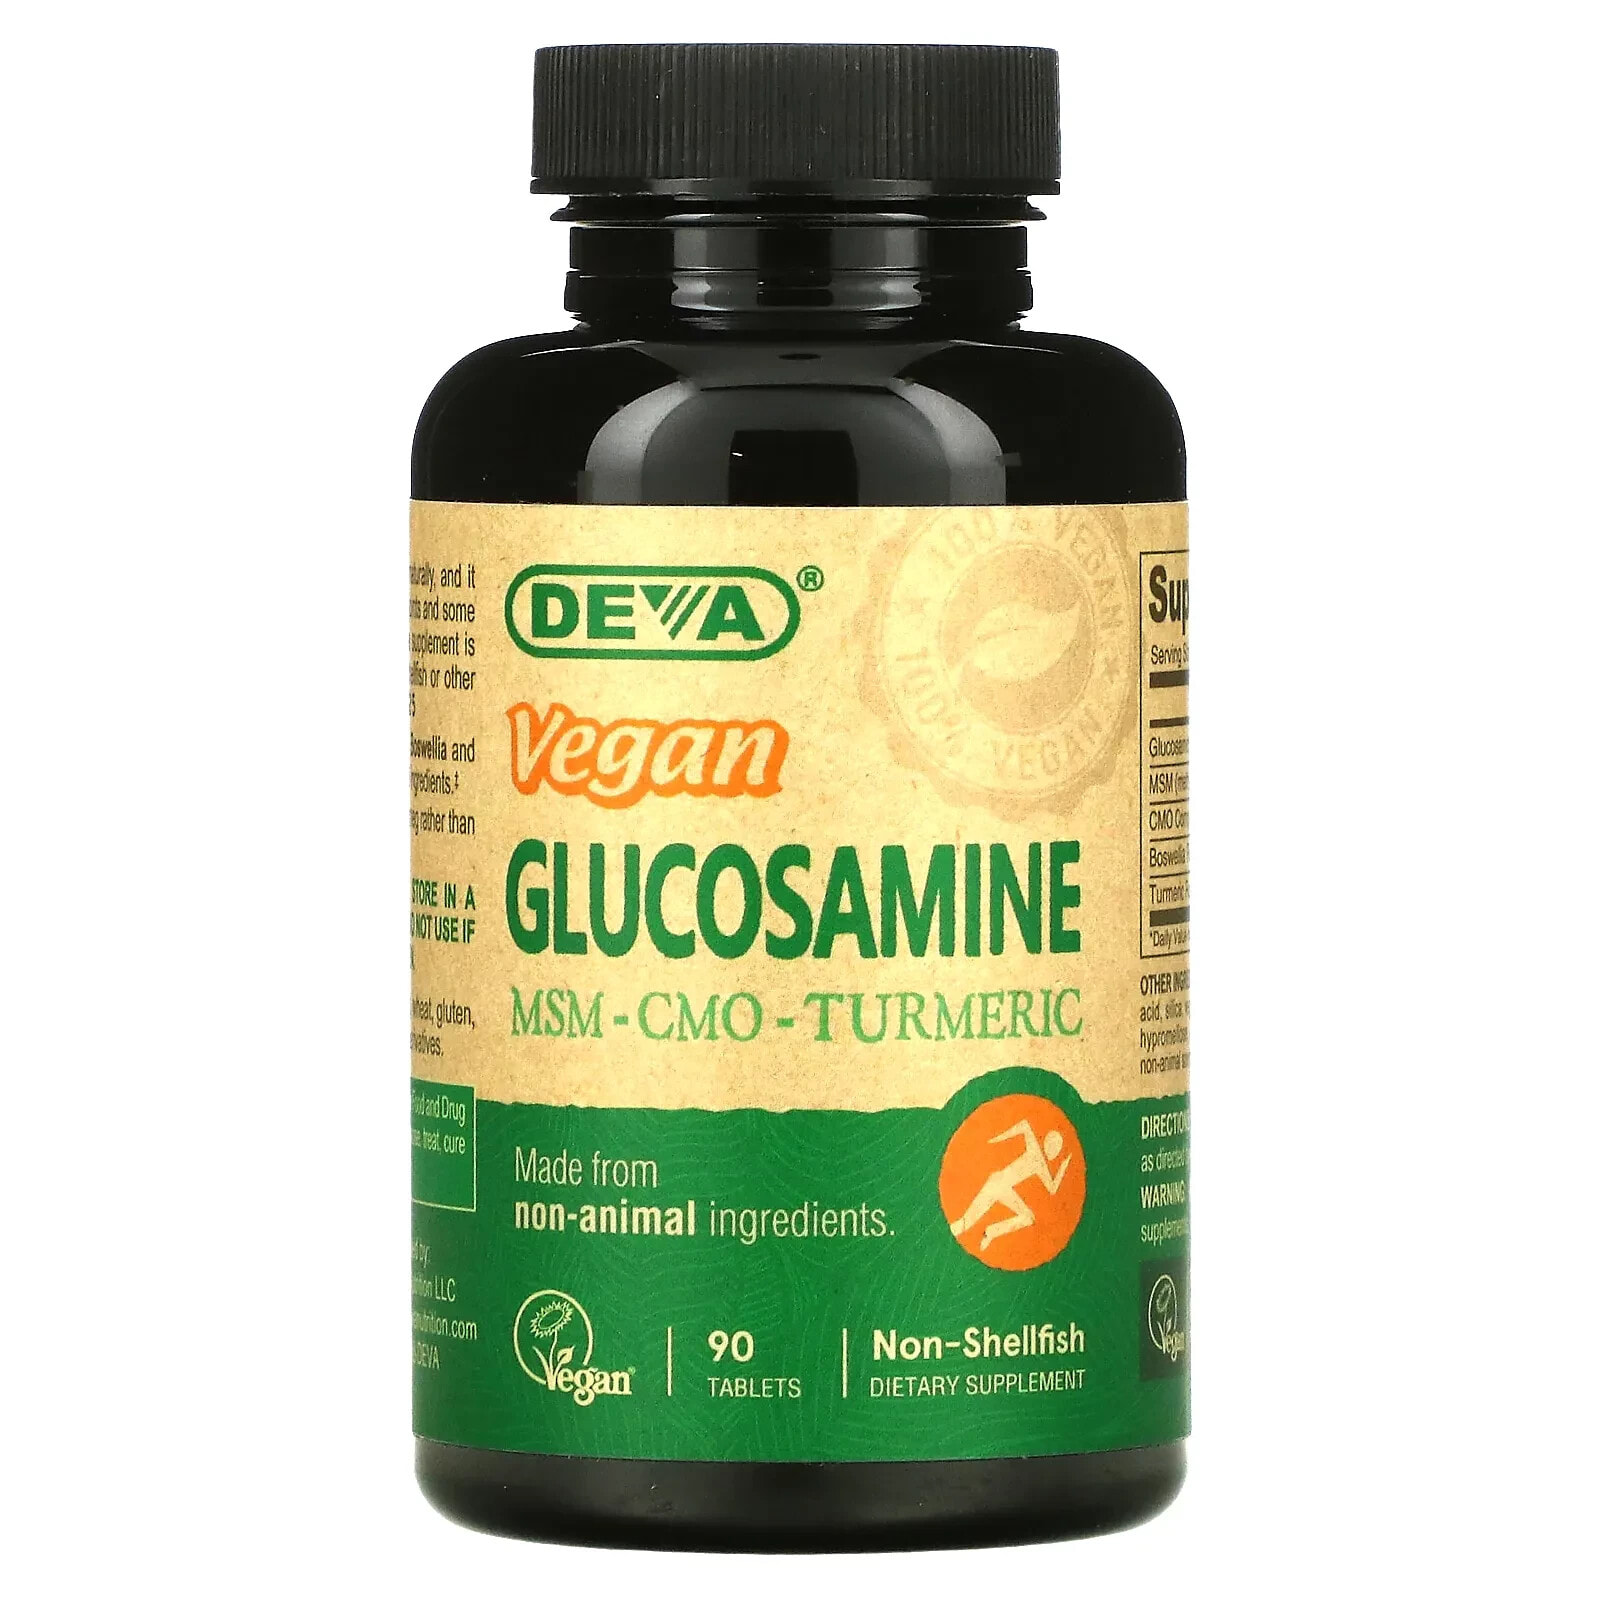 Vegan Glucosamine MSM - CMO - Turmeric, 90 Tablets